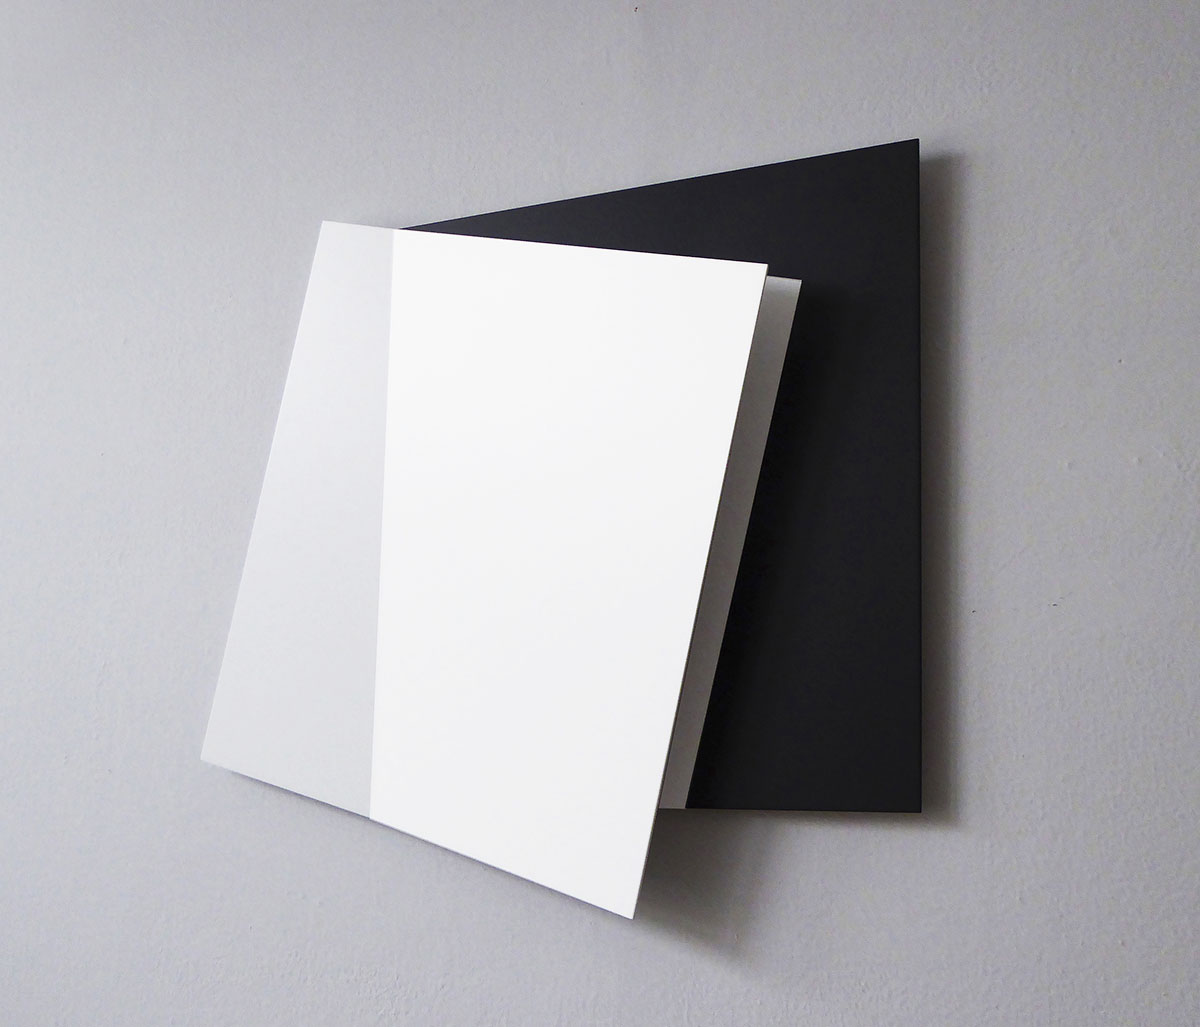 Weiß-Schwarz-Weißraum I, 201658,5 x 70 x 5 cmaluminium, acrylic lacquer